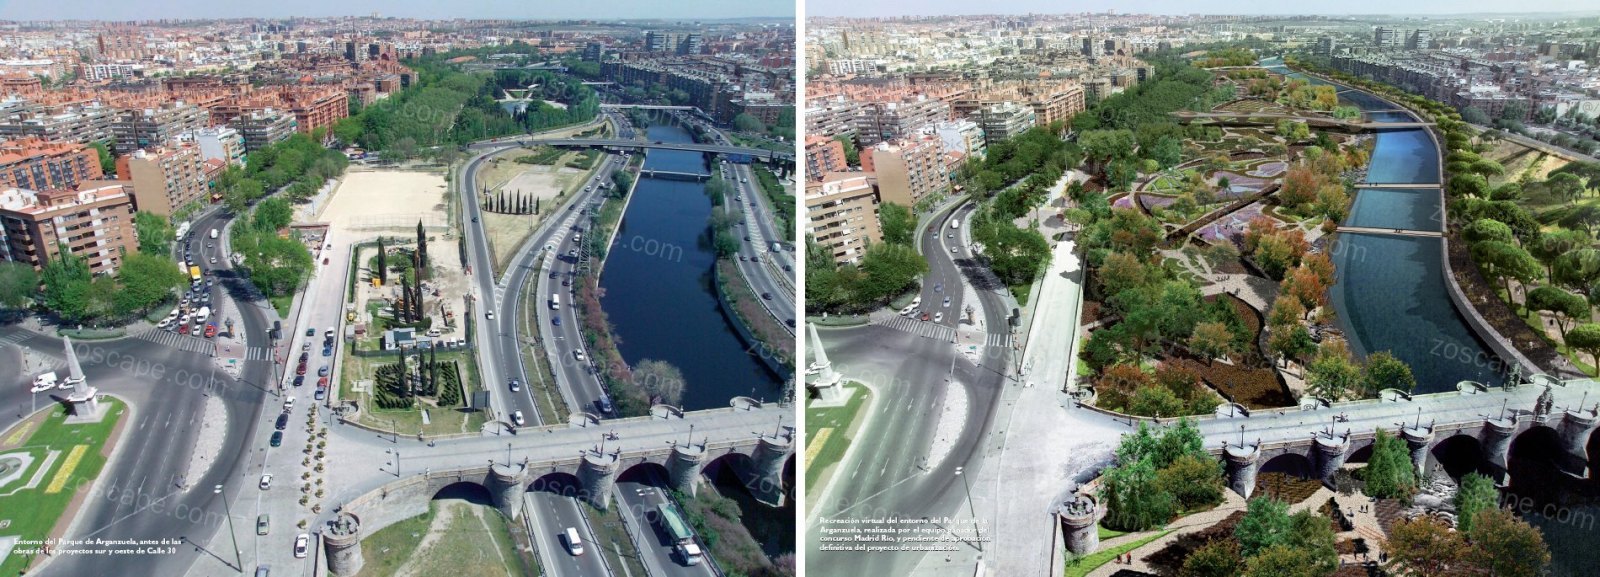 Madrid RIO带状滨水公园绿地景观规划设计Madrid RIO带状滨水公园绿地景观规划设计 ... ... ... ... ... ... ...